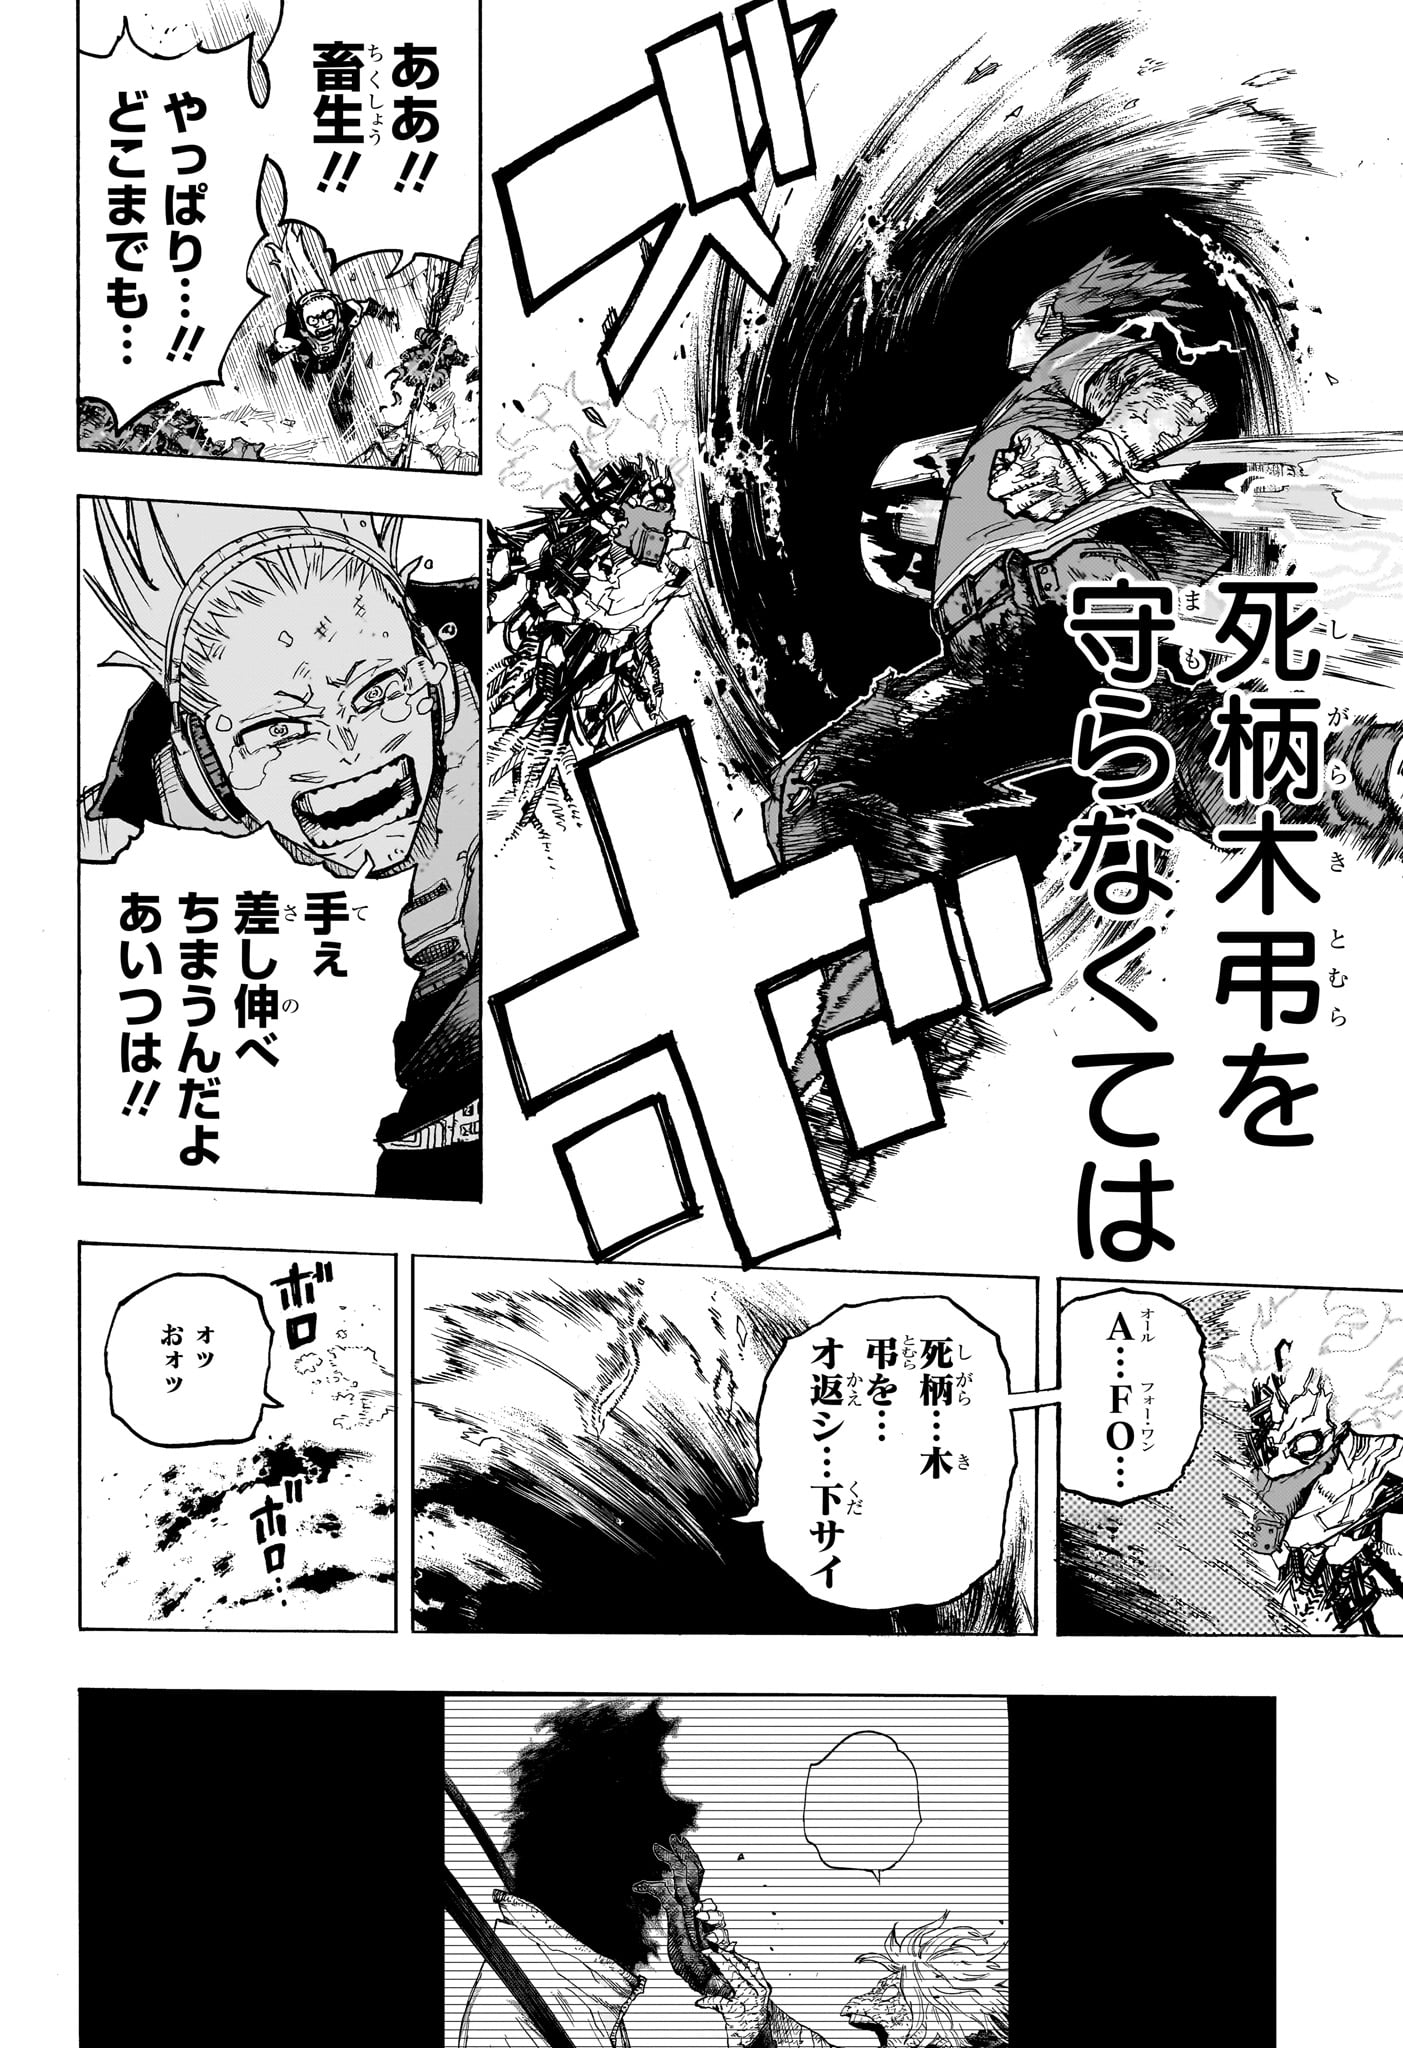 Boku no Hero Academia - Chapter 423 - Page 6